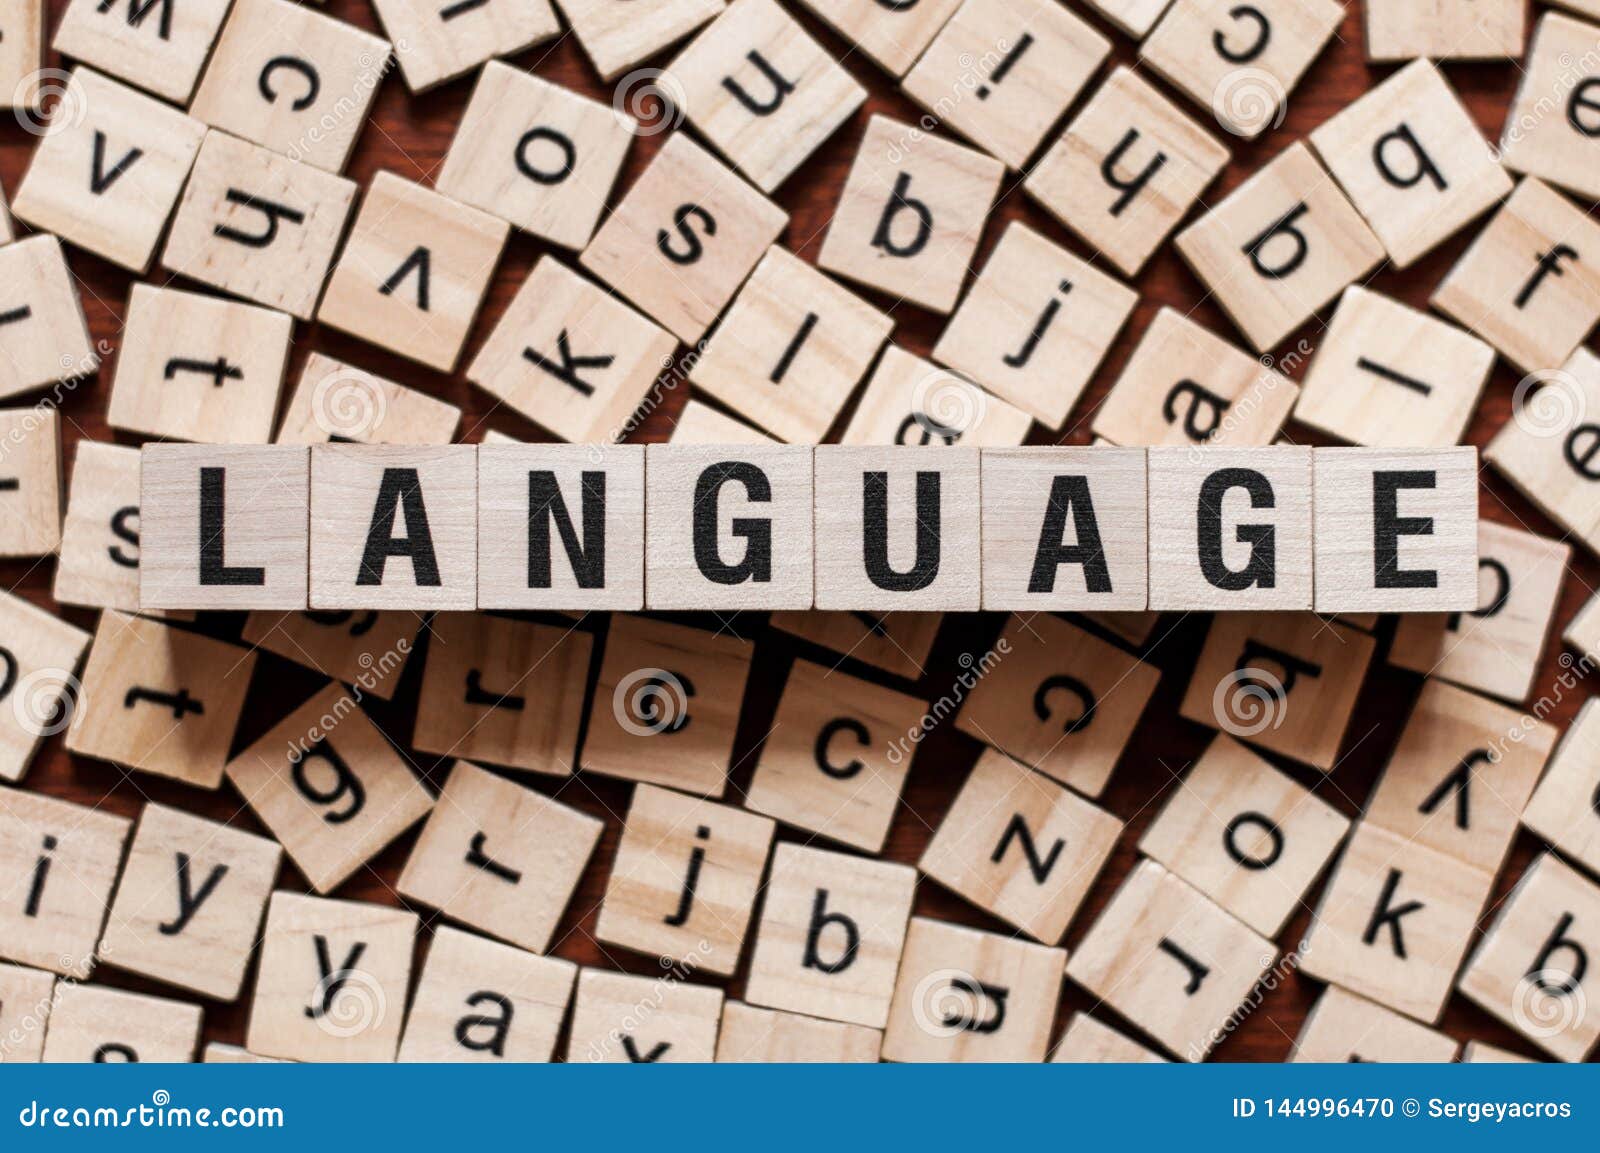 Language word concept stock photo. Image of education - 144996470